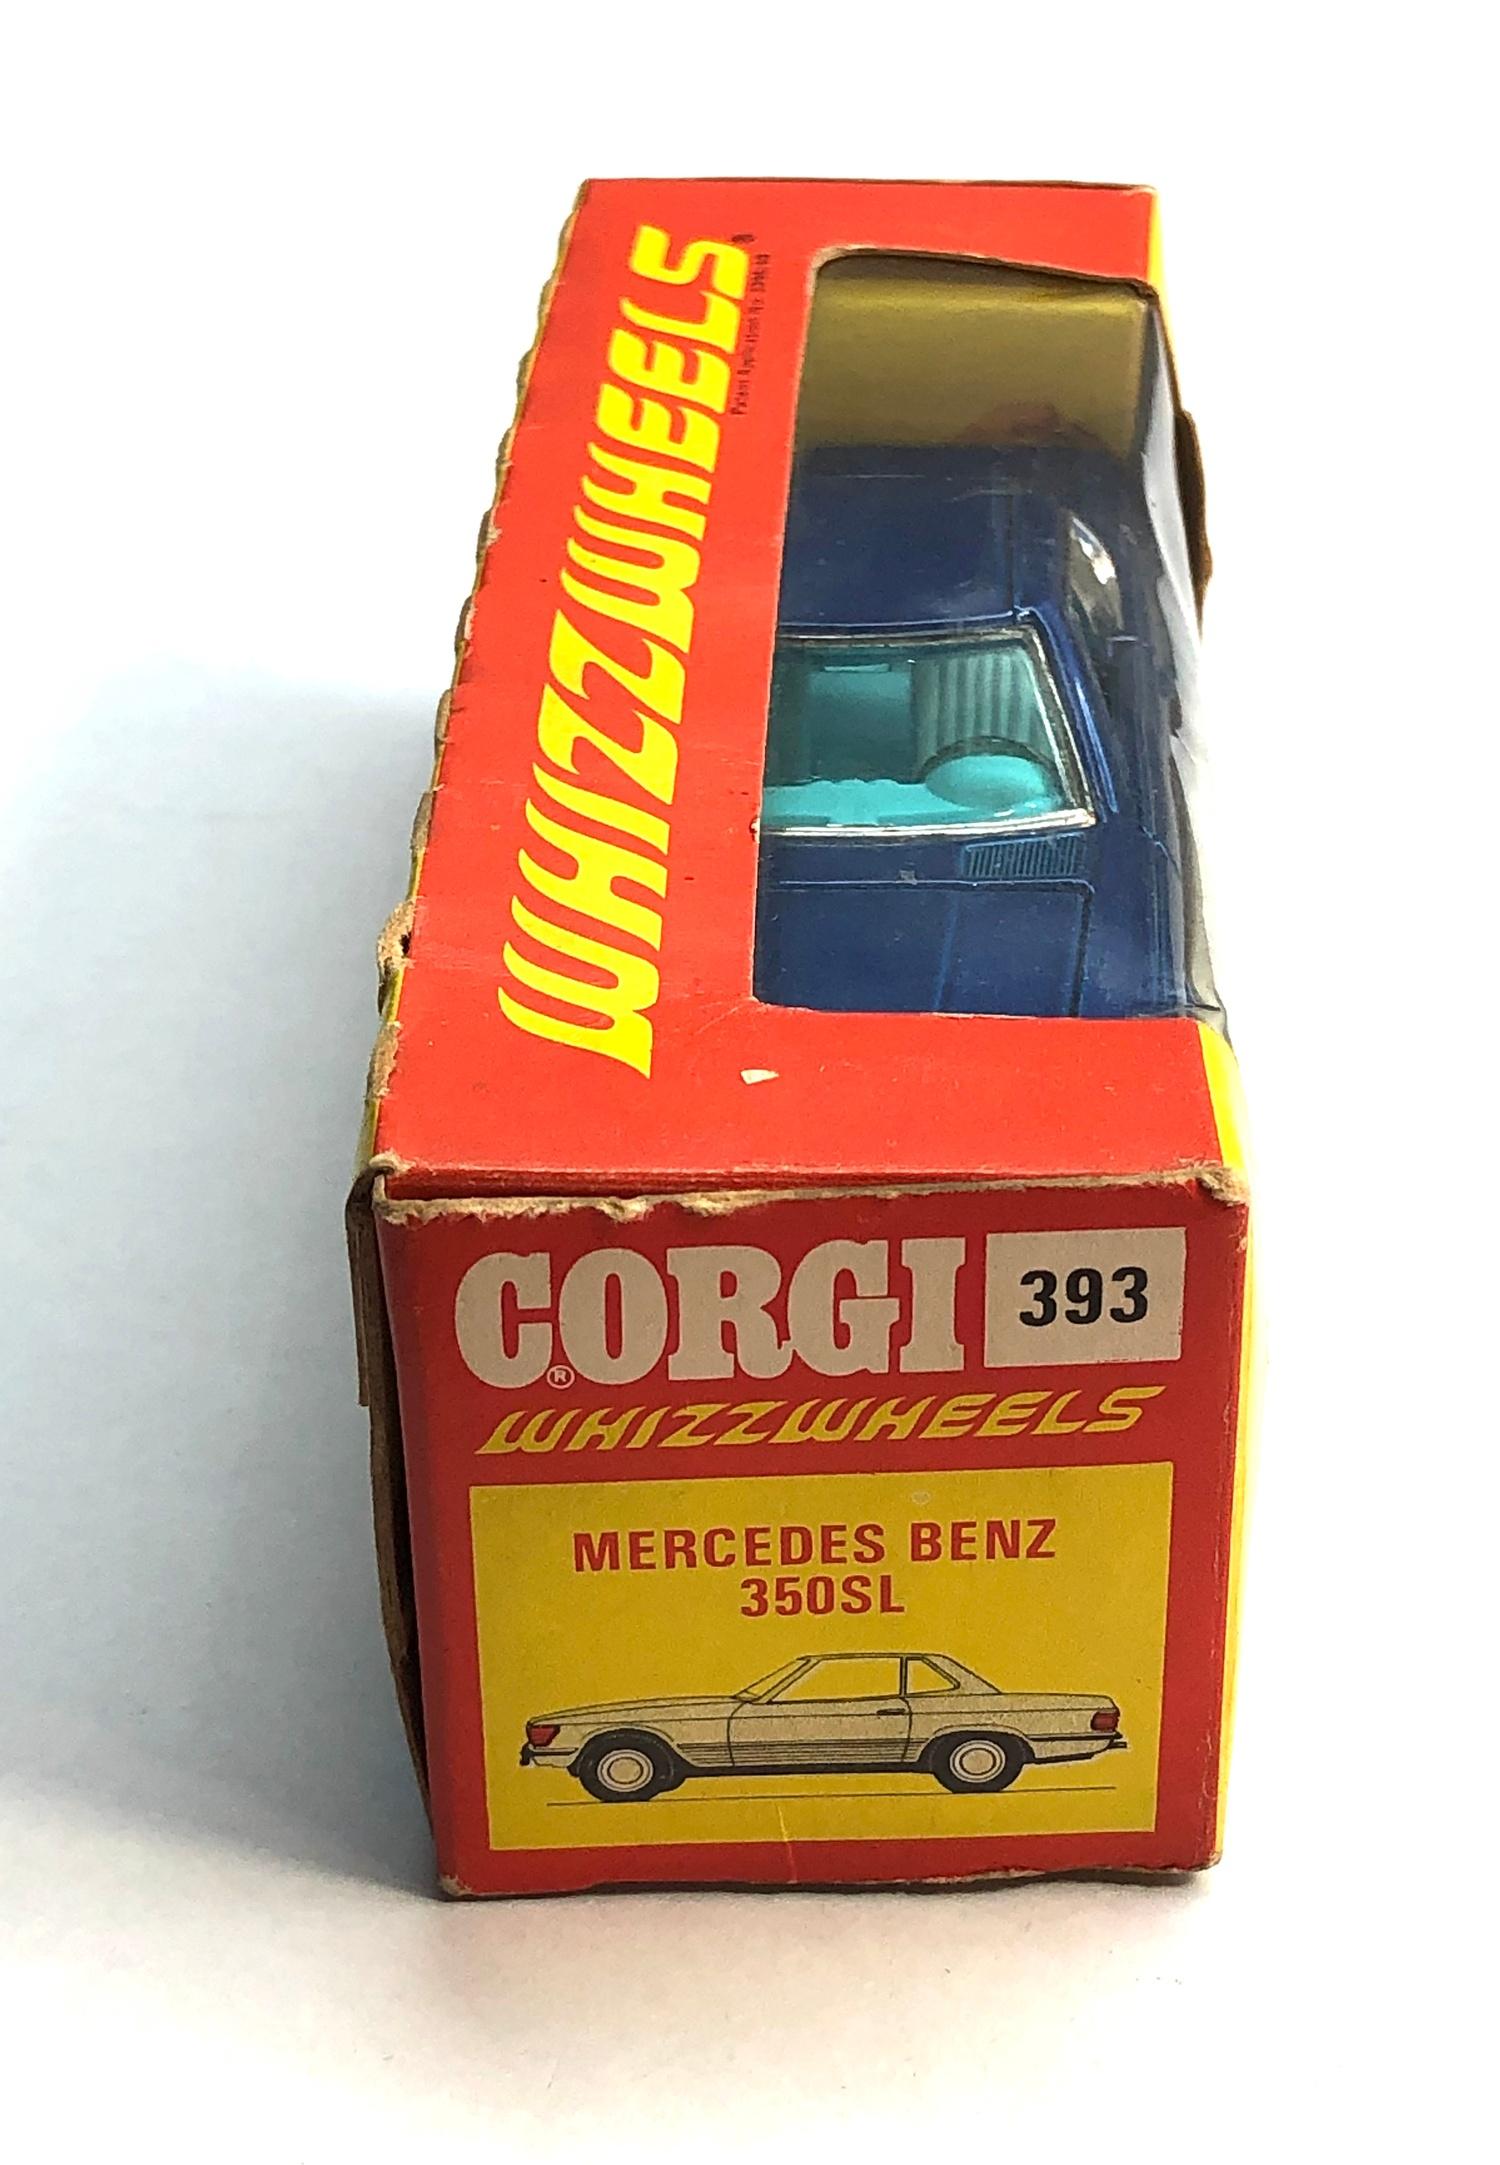 corgi 393 Mercedes Benz 350sl boxed - Image 3 of 3